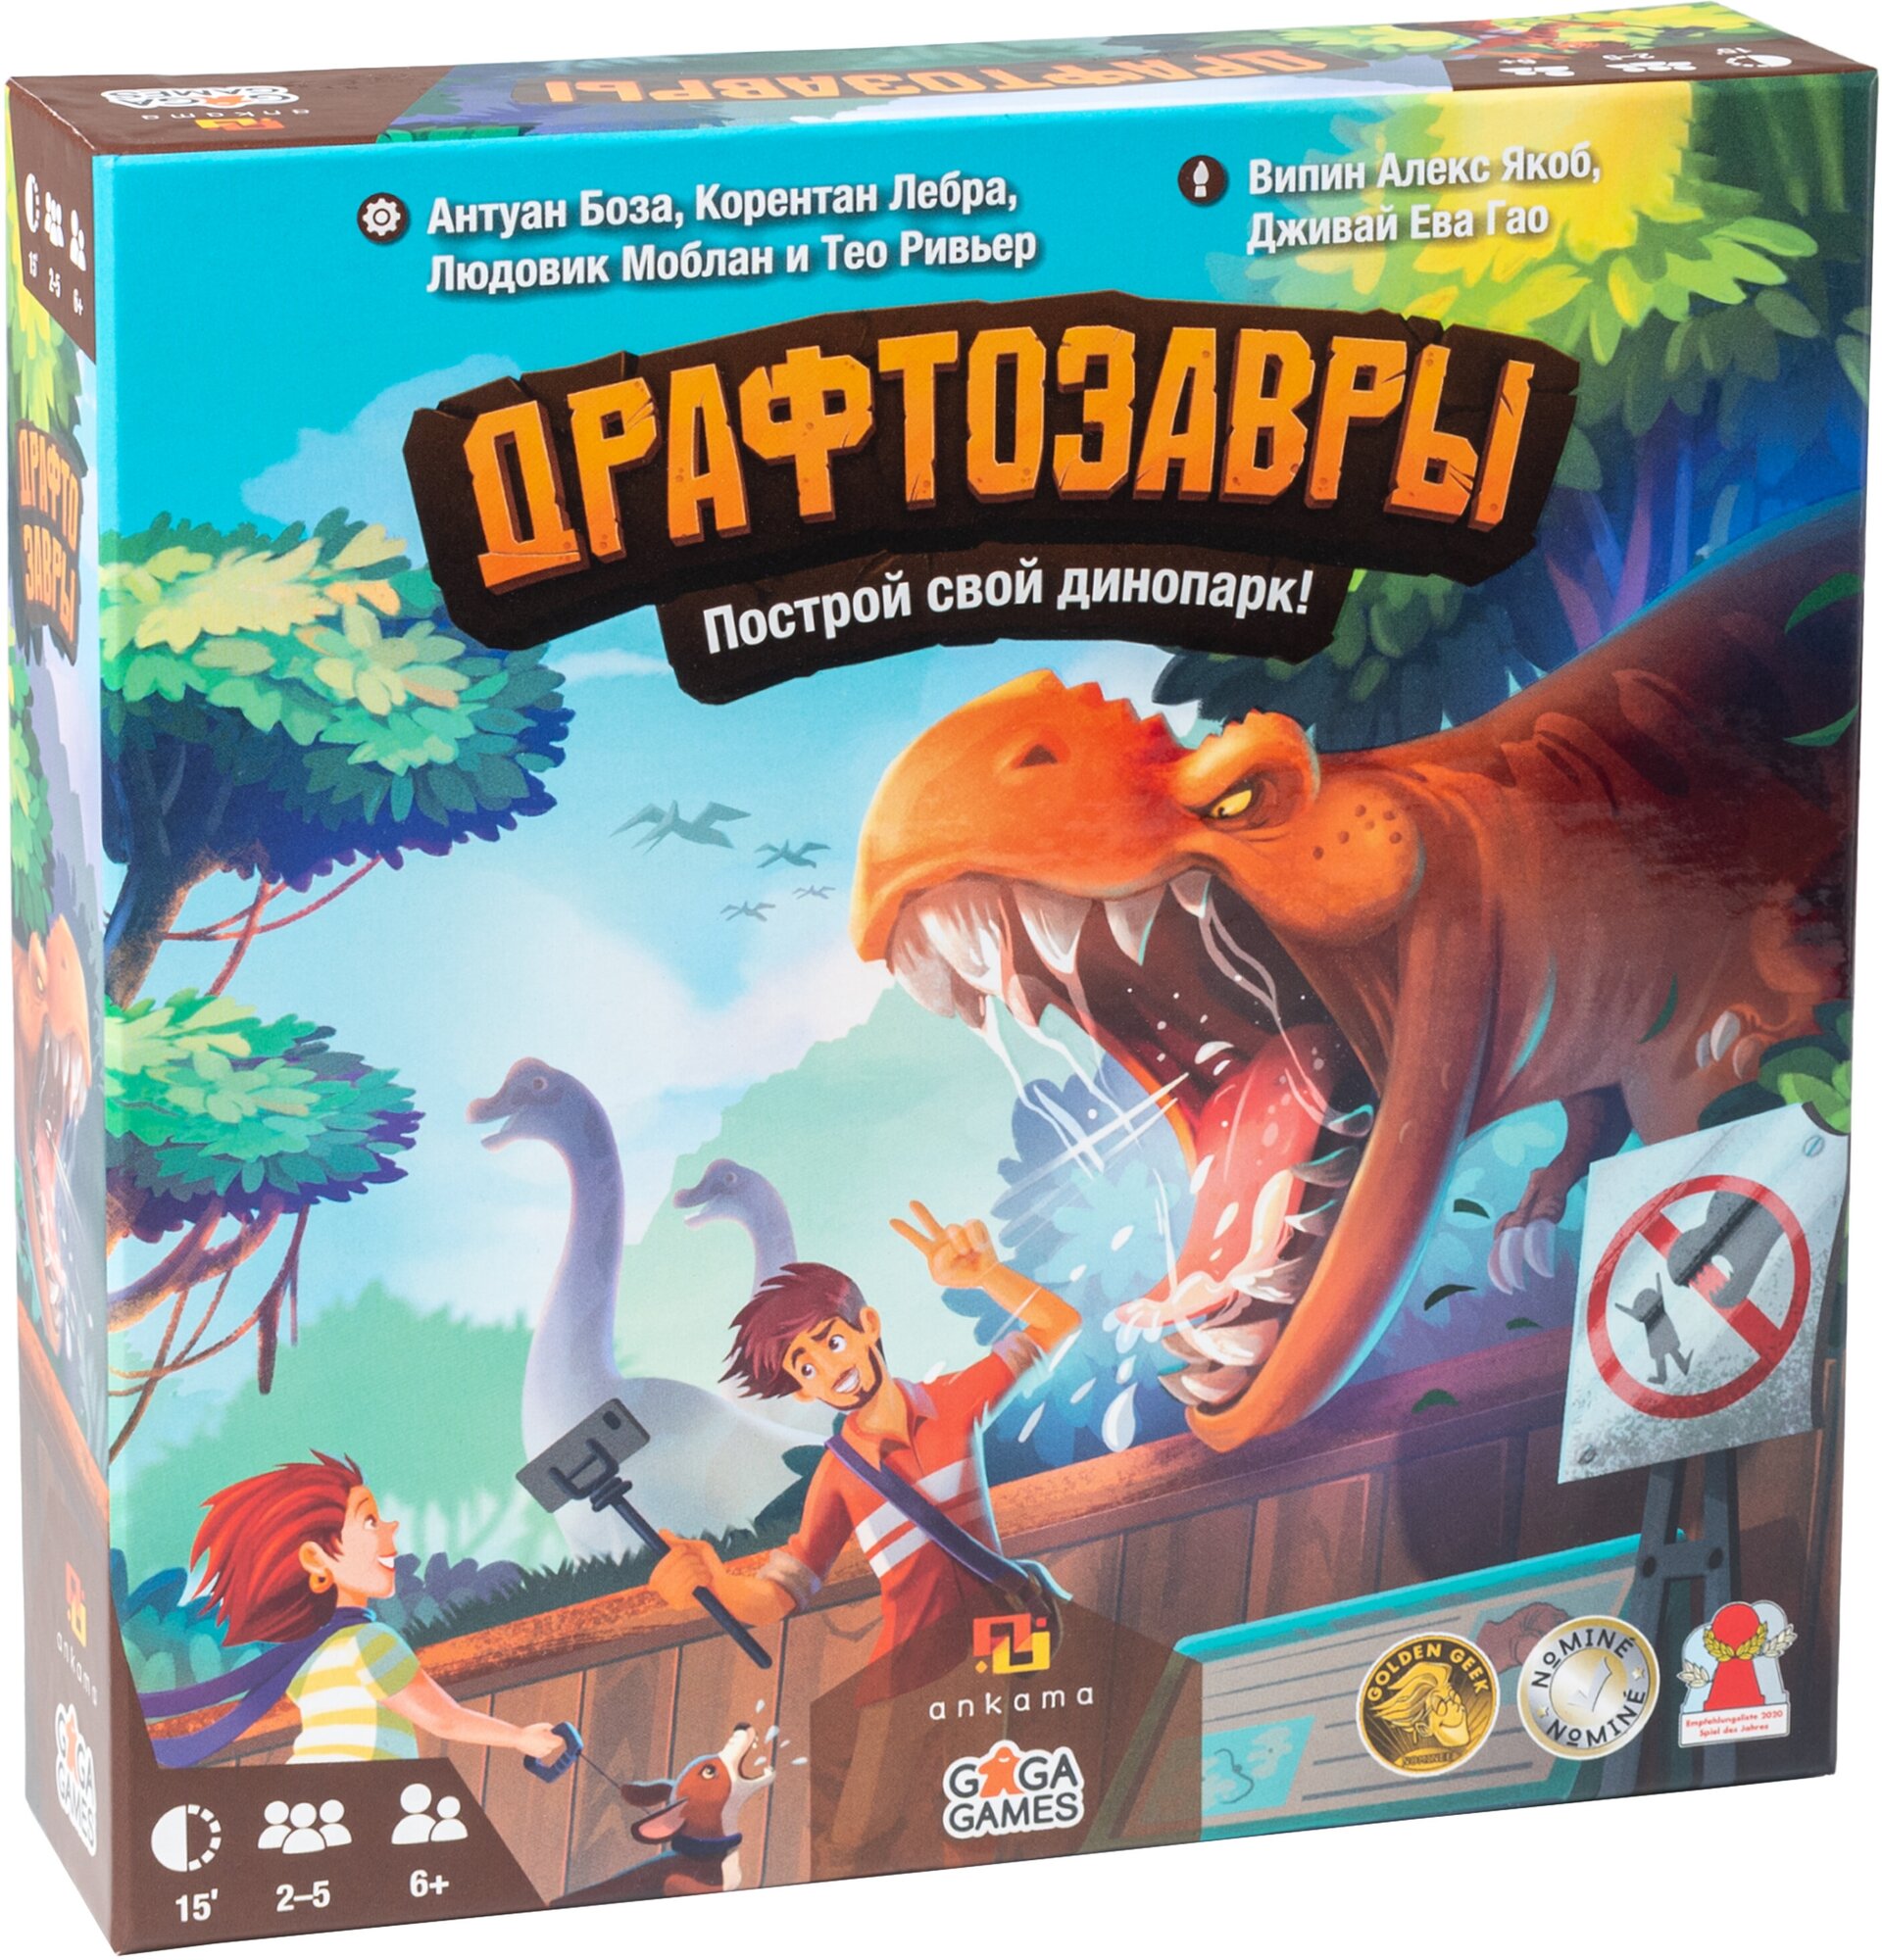 Настольная игра GaGa Games Драфтозавры, 1 шт.